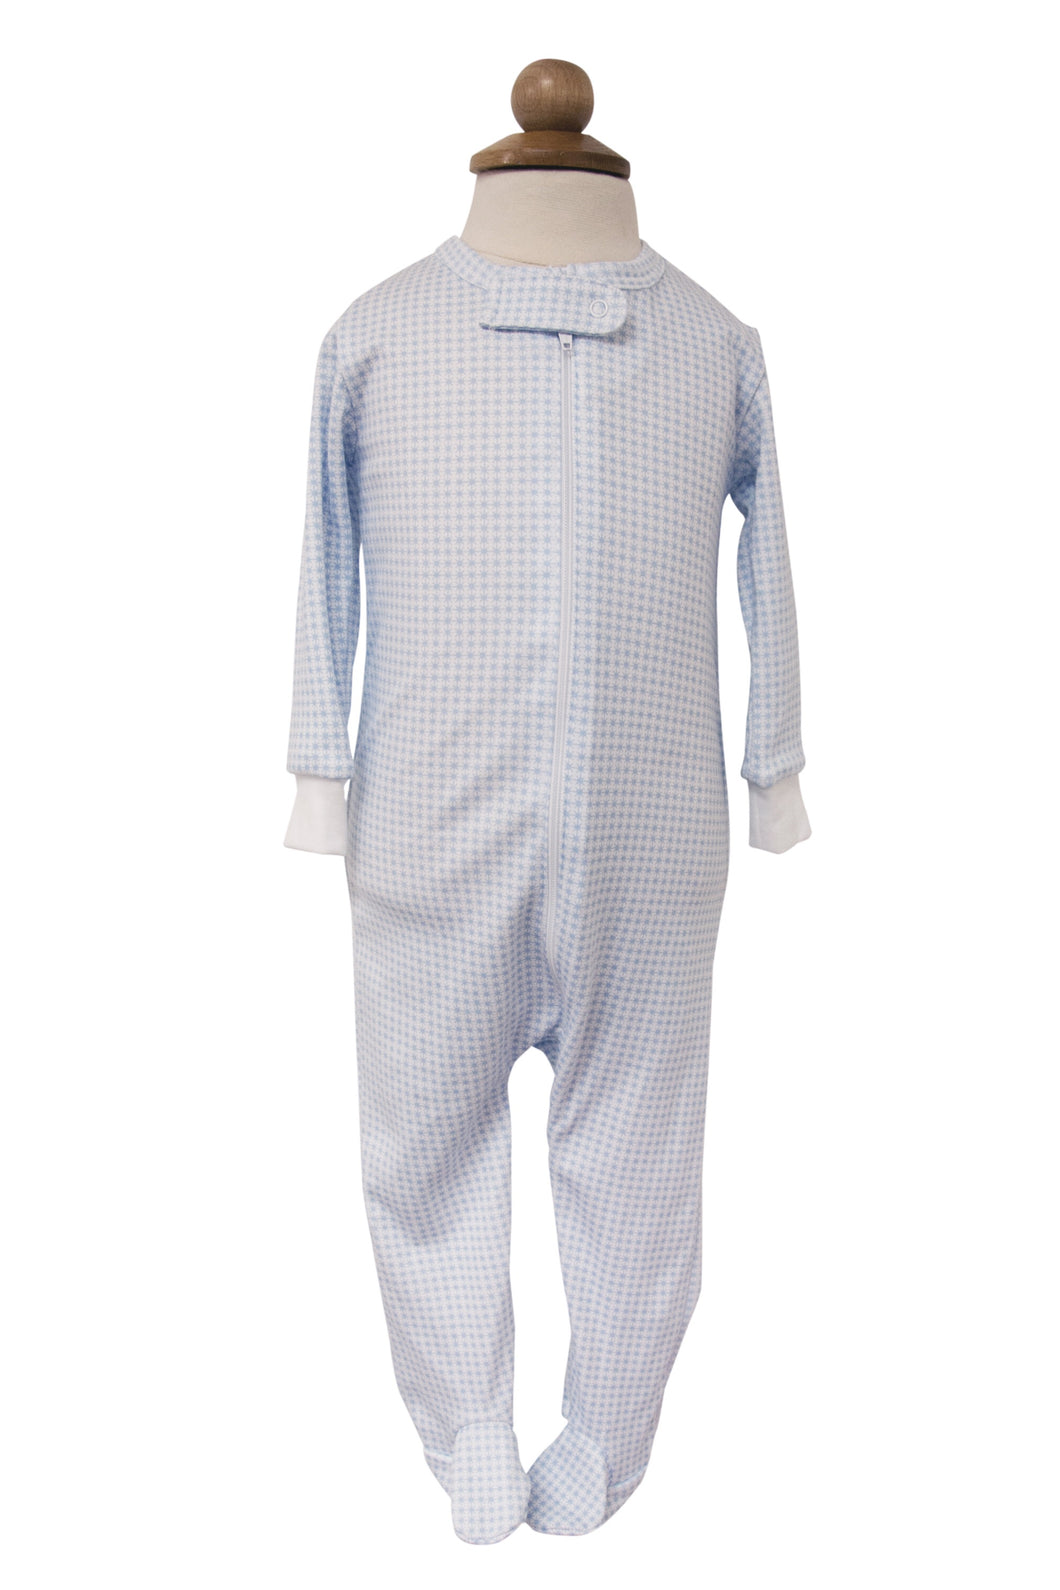 Petite Stars Blue Zipper Pajama